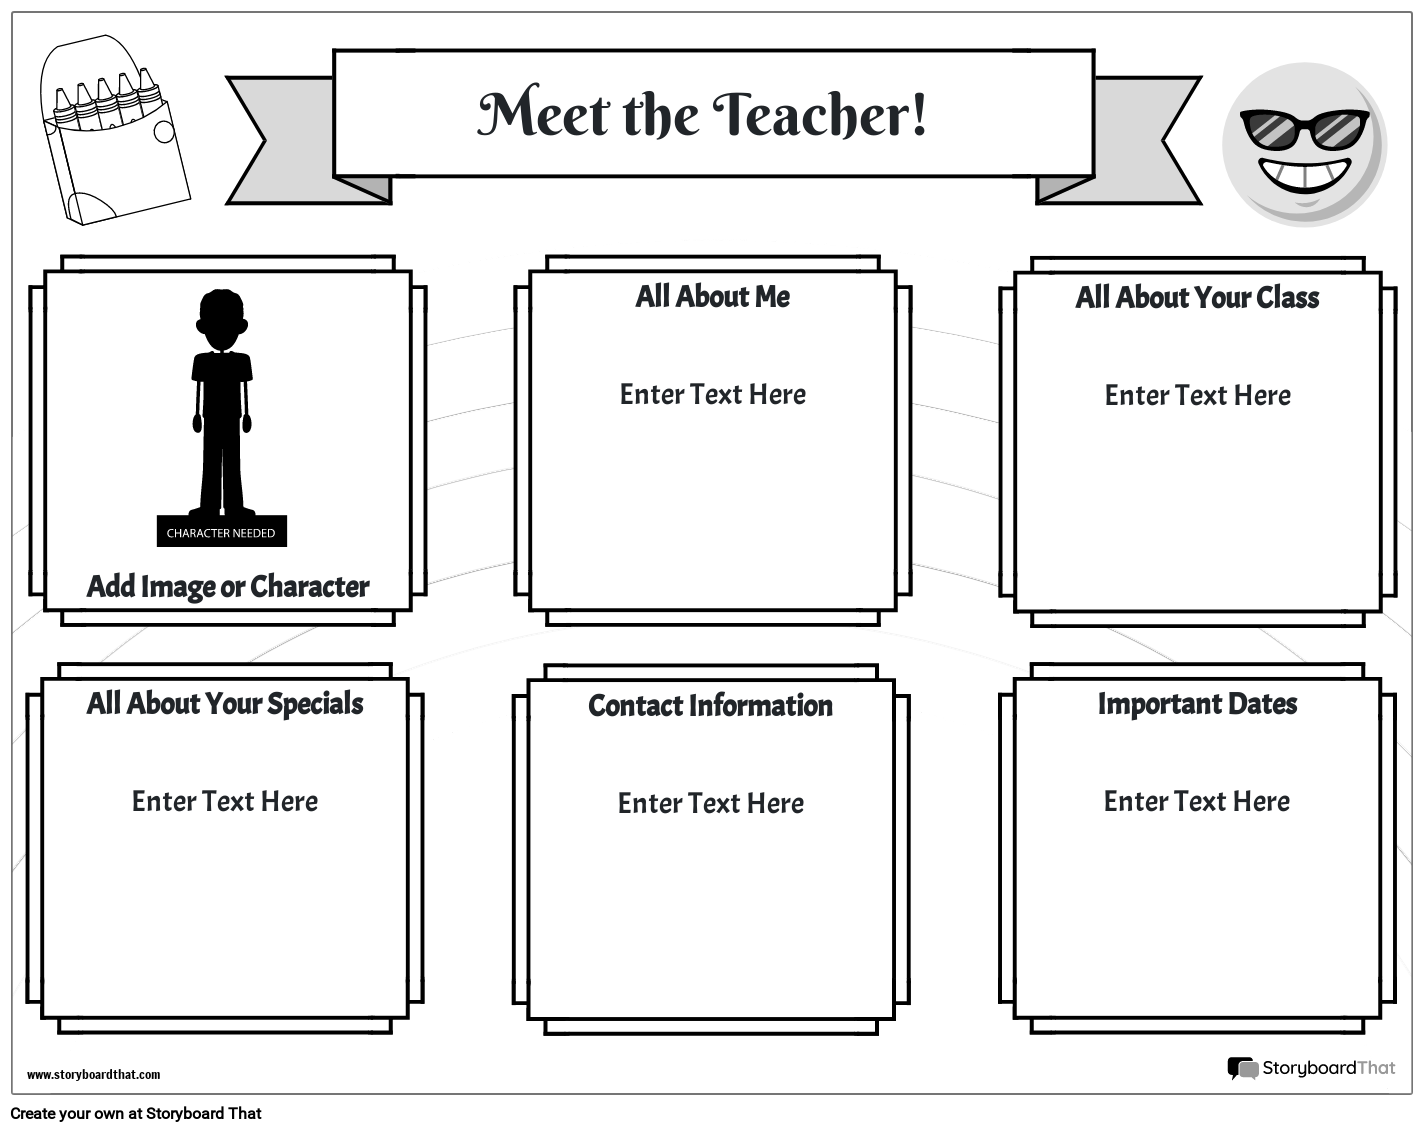 meet-the-teacher-landscape-bw-1-storyboard-by-worksheet-templates